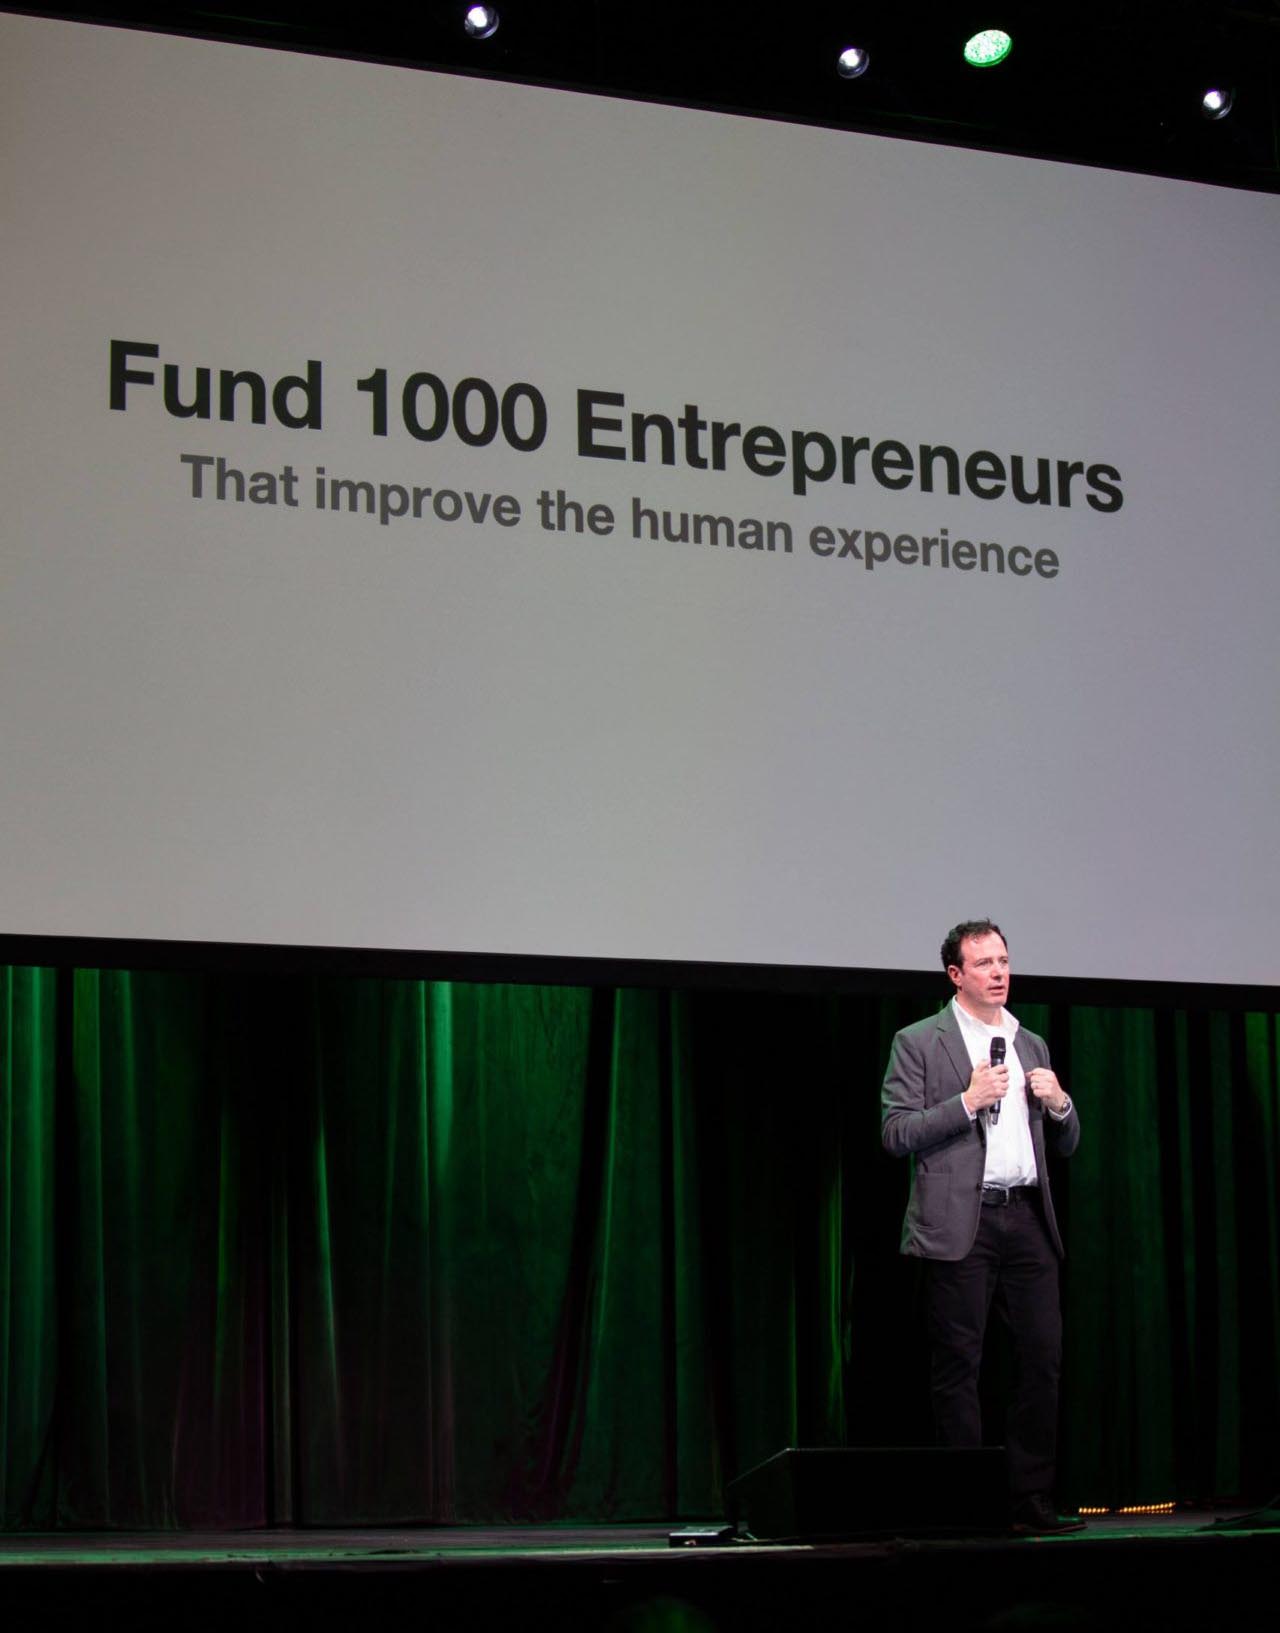 Fund 1000 Entrepenours - Greg Raiz speaking from stage